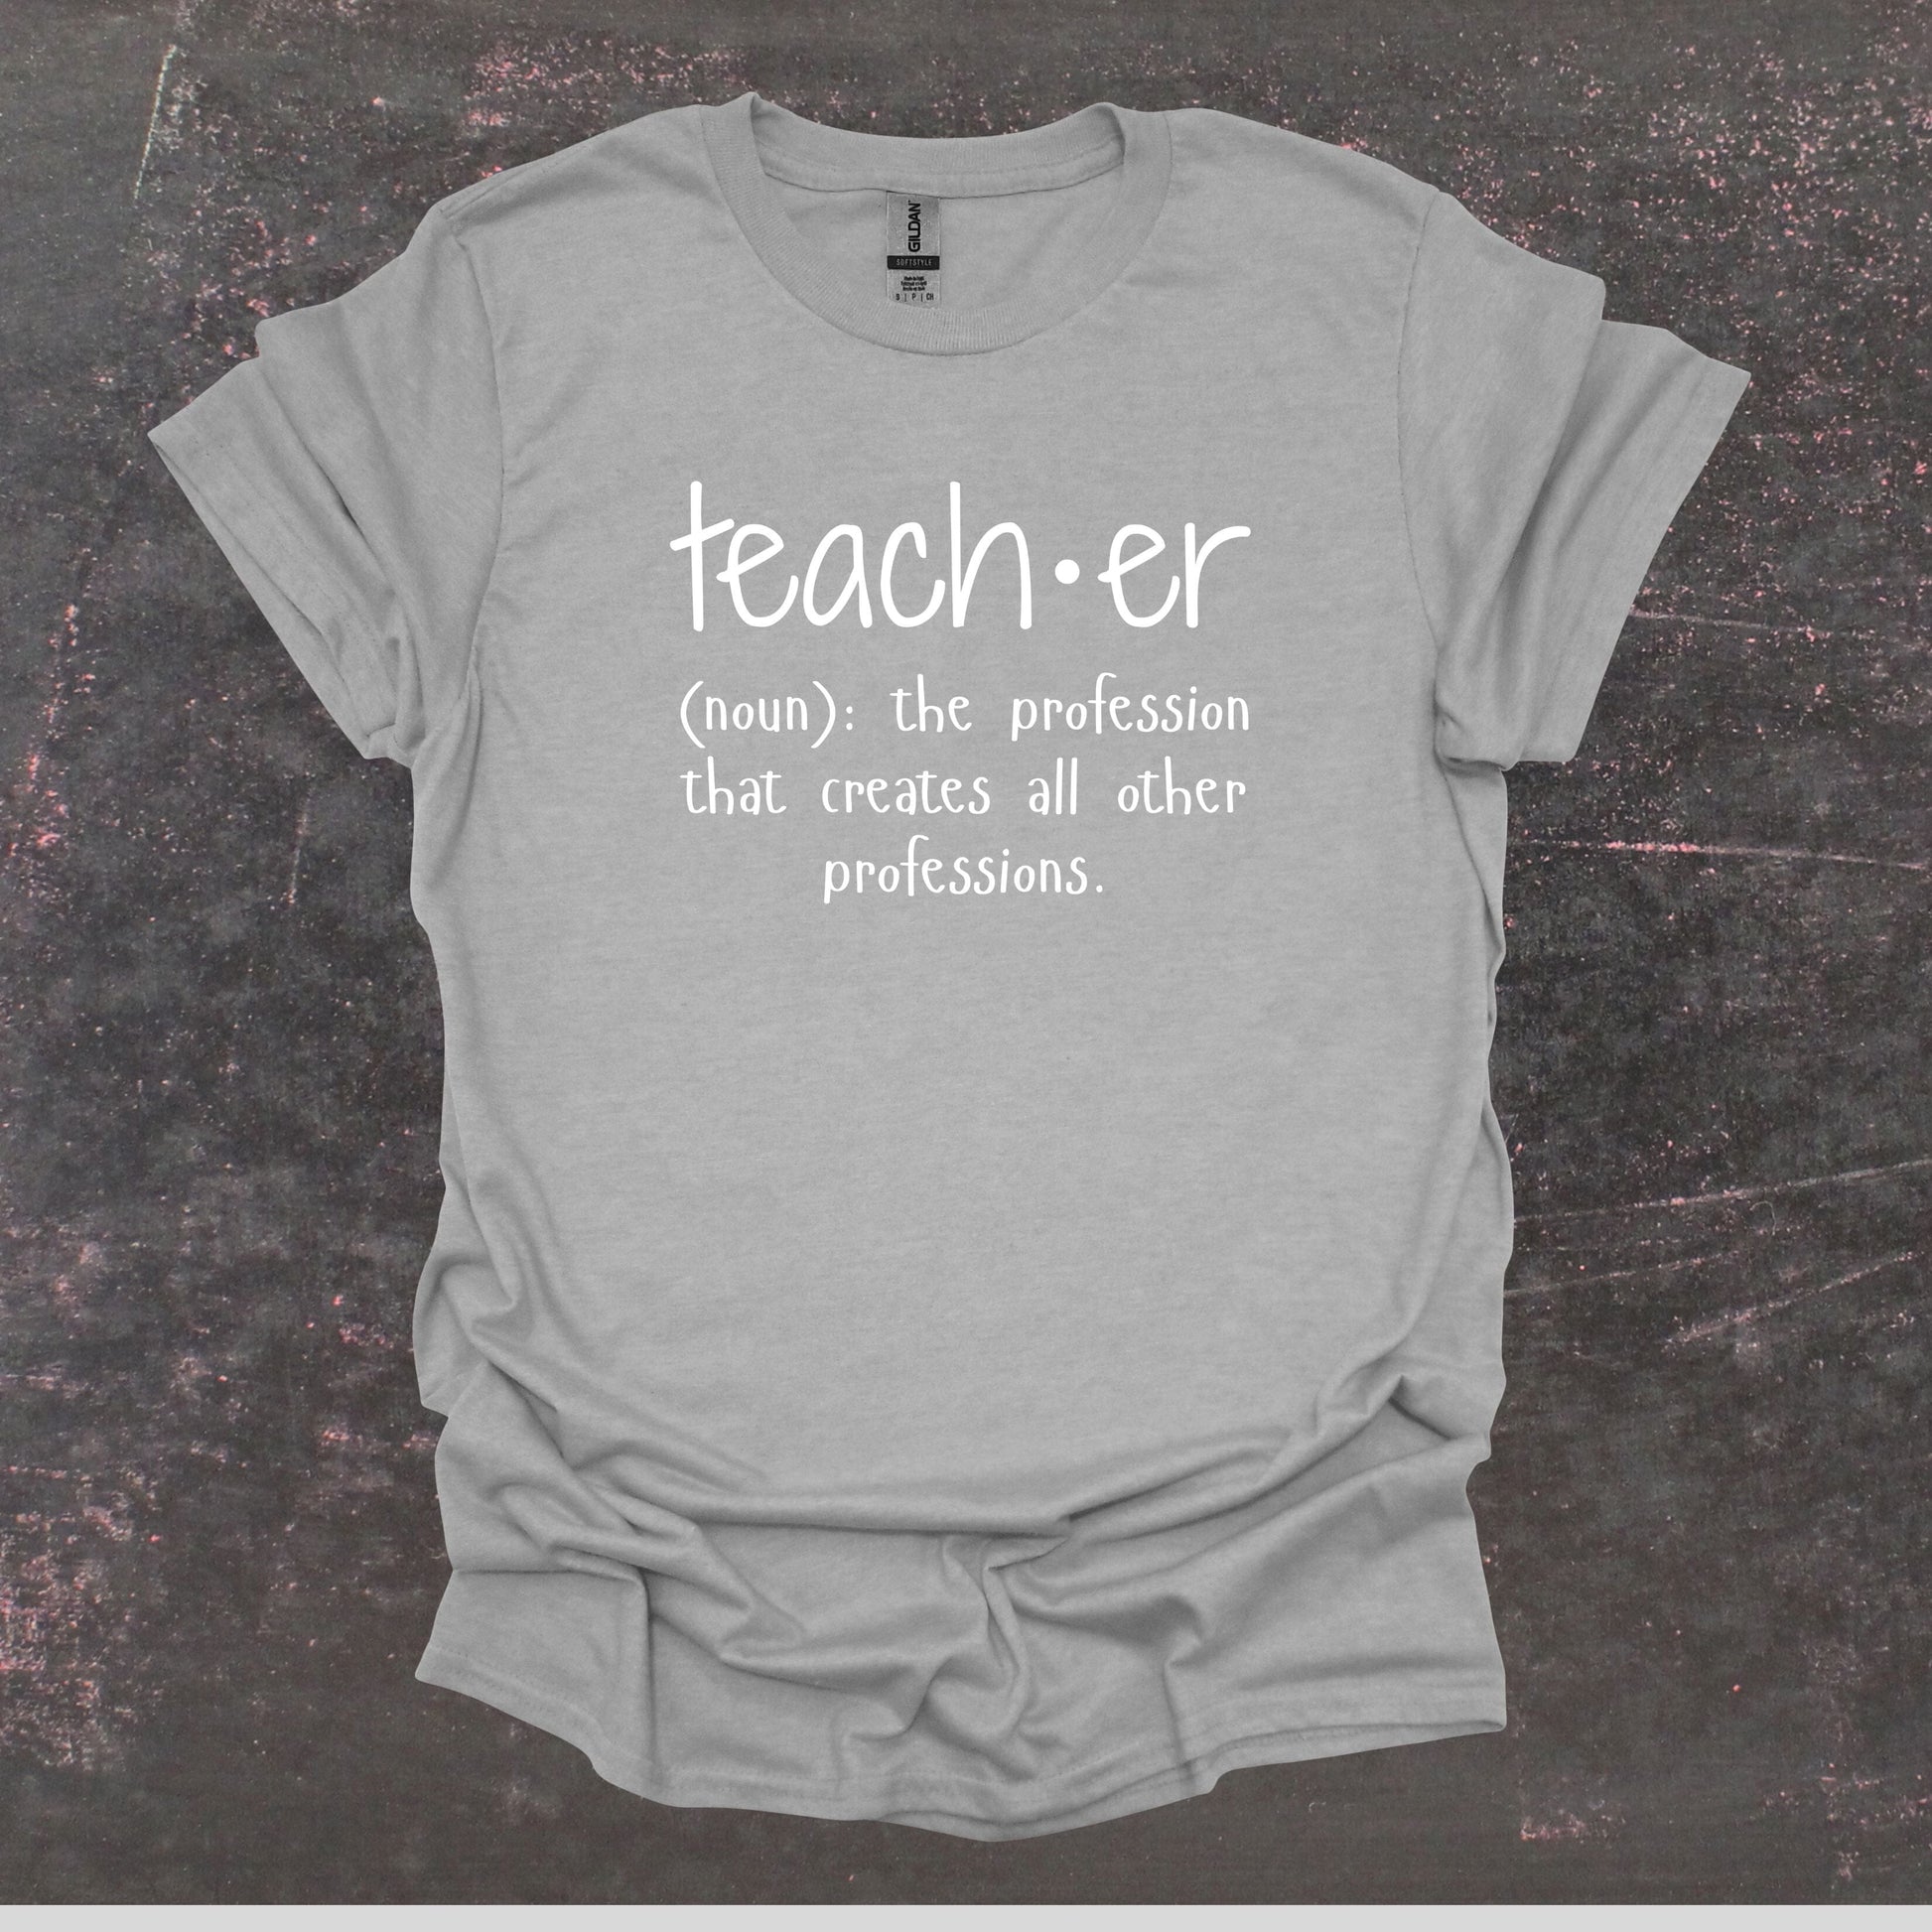 Teacher Definition - Teacher T Shirt - Adult Tee Shirts T-Shirts Graphic Avenue Sport Grey Adult Small 